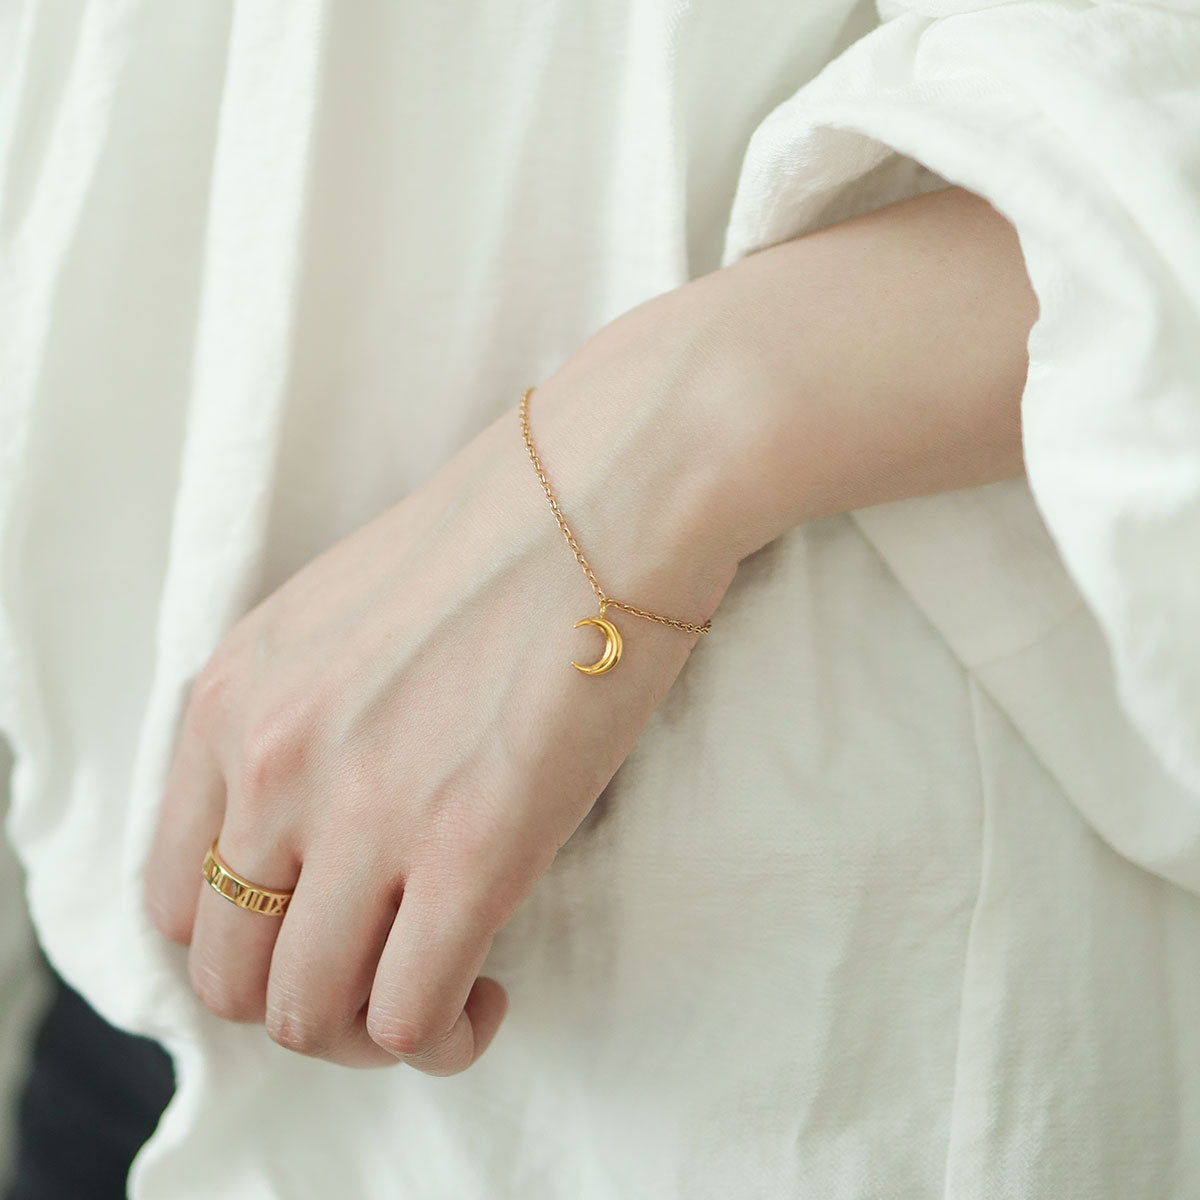 Women wear lunar gold bracelet and gold band ring.